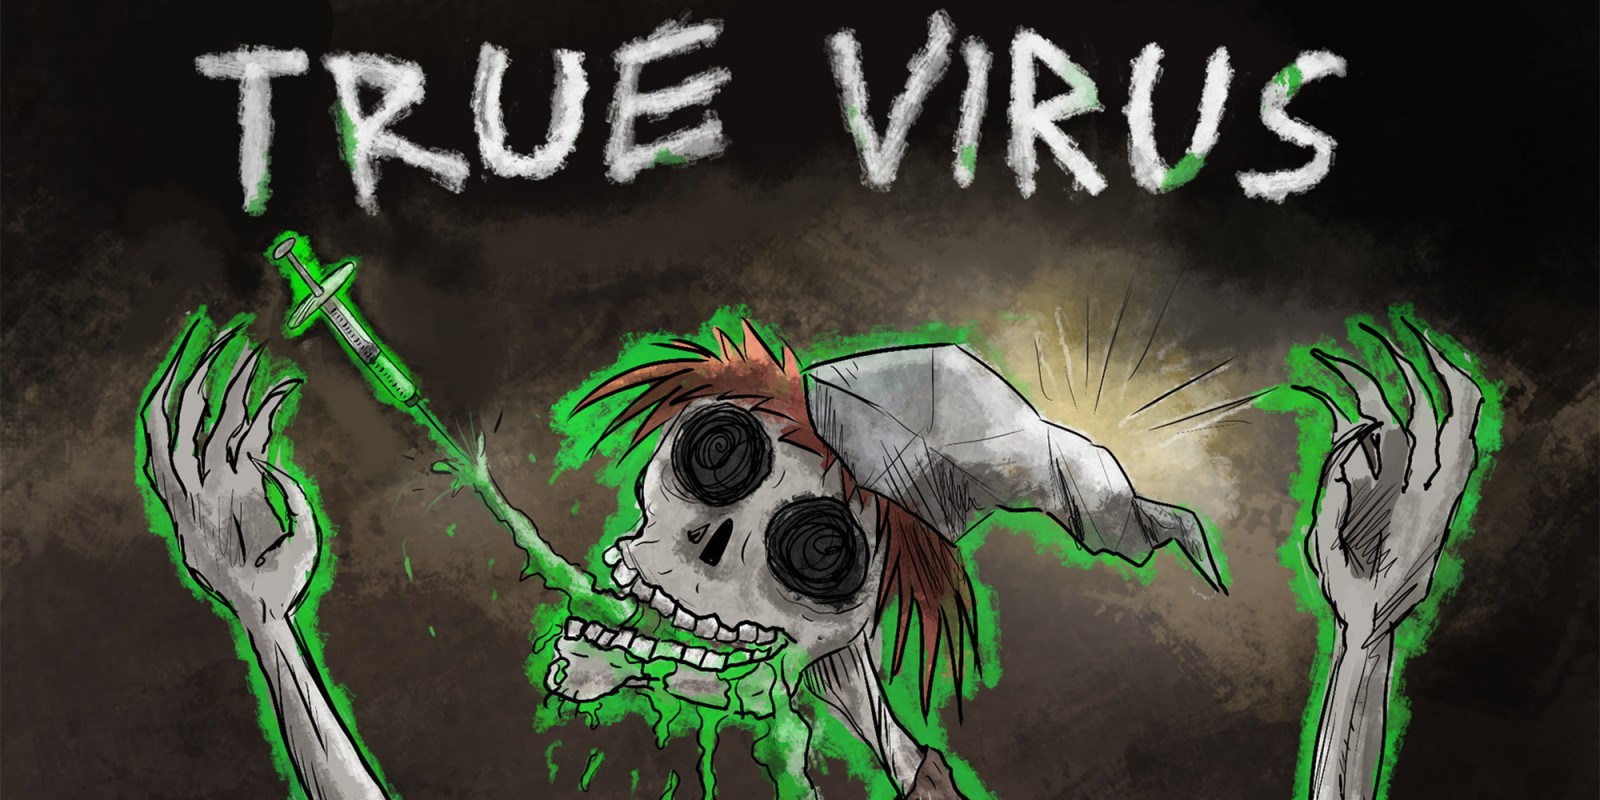 True Virus